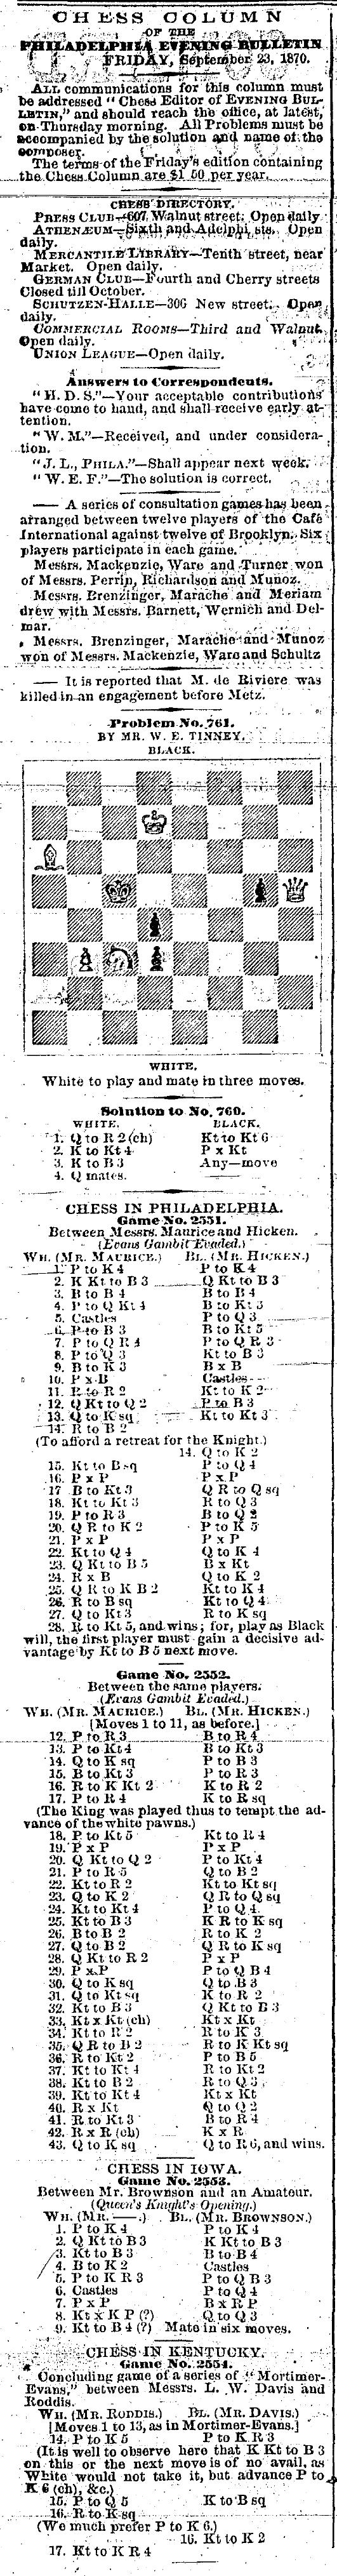 1870.09.23-01 Philadelphia Daily Evening Bulletin.jpg